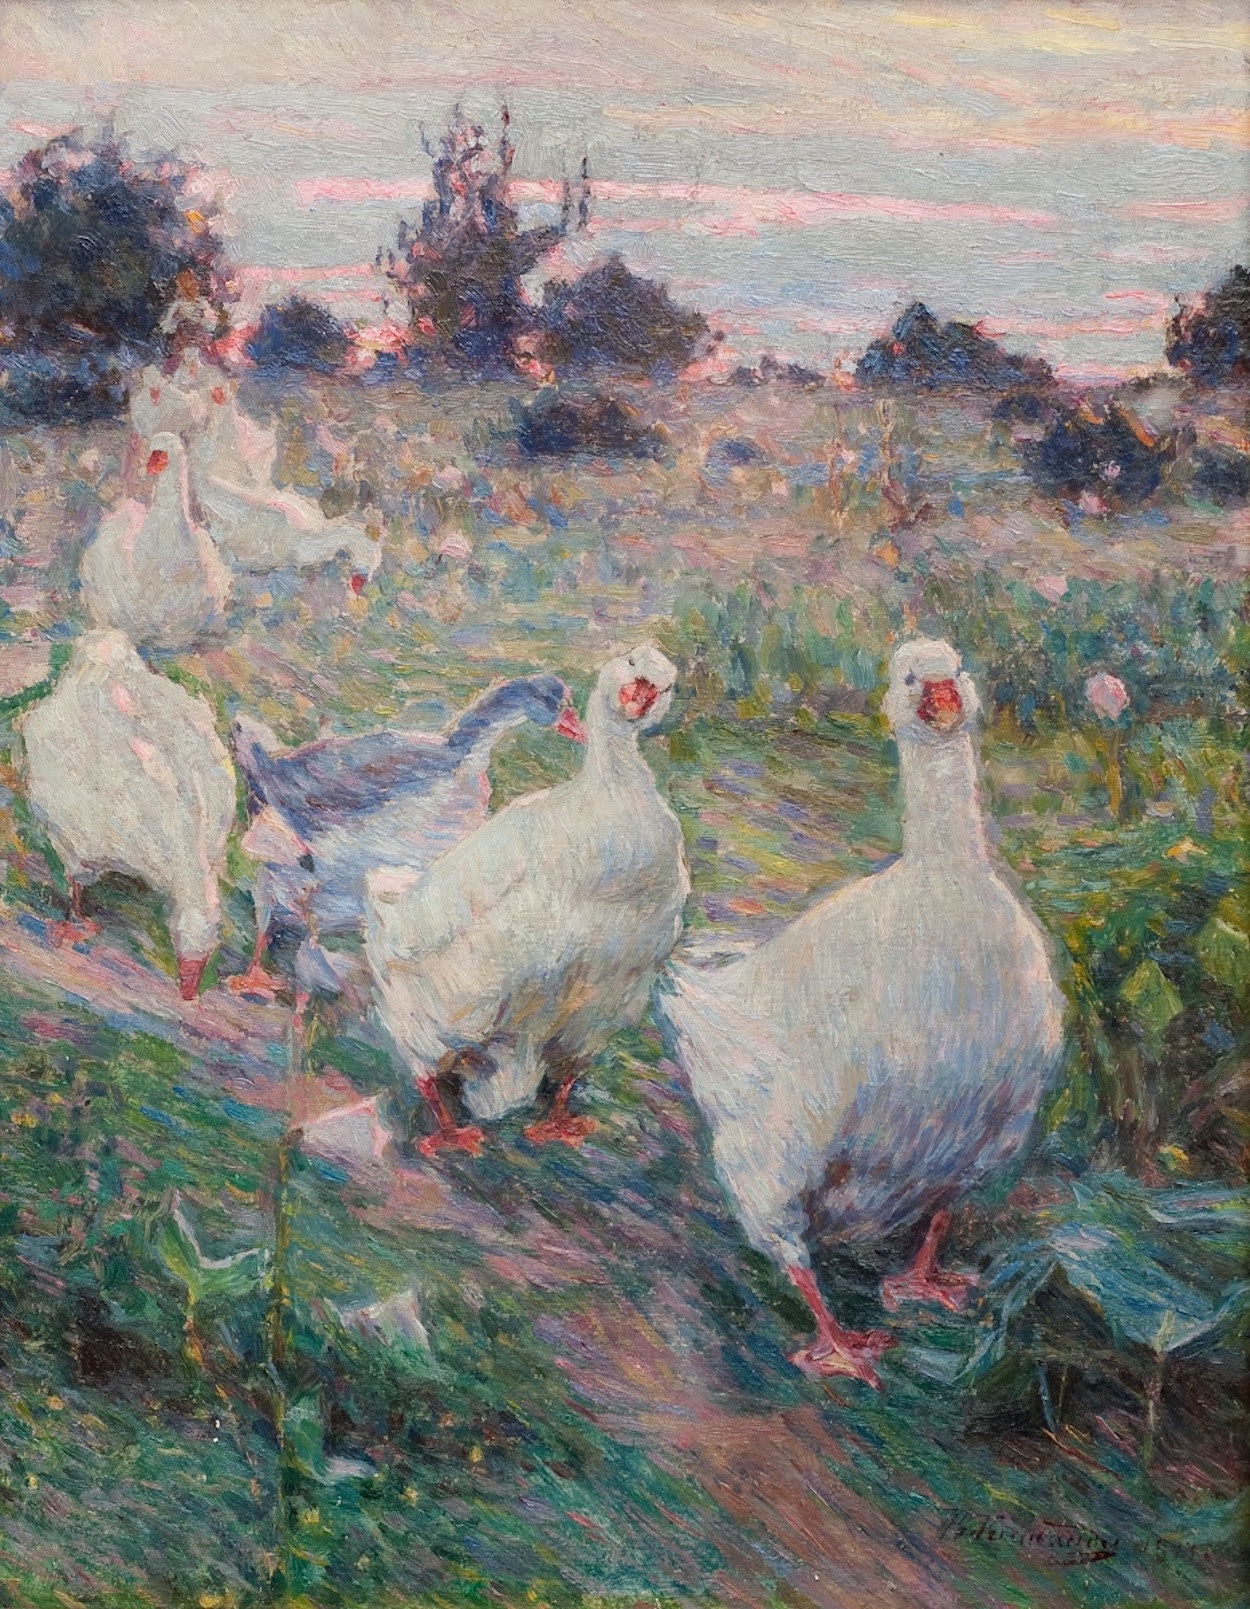 Geese by Kyriak Kostandi - 1913 - 45.5 x 35.8 cm National Art Museum of Ukraine